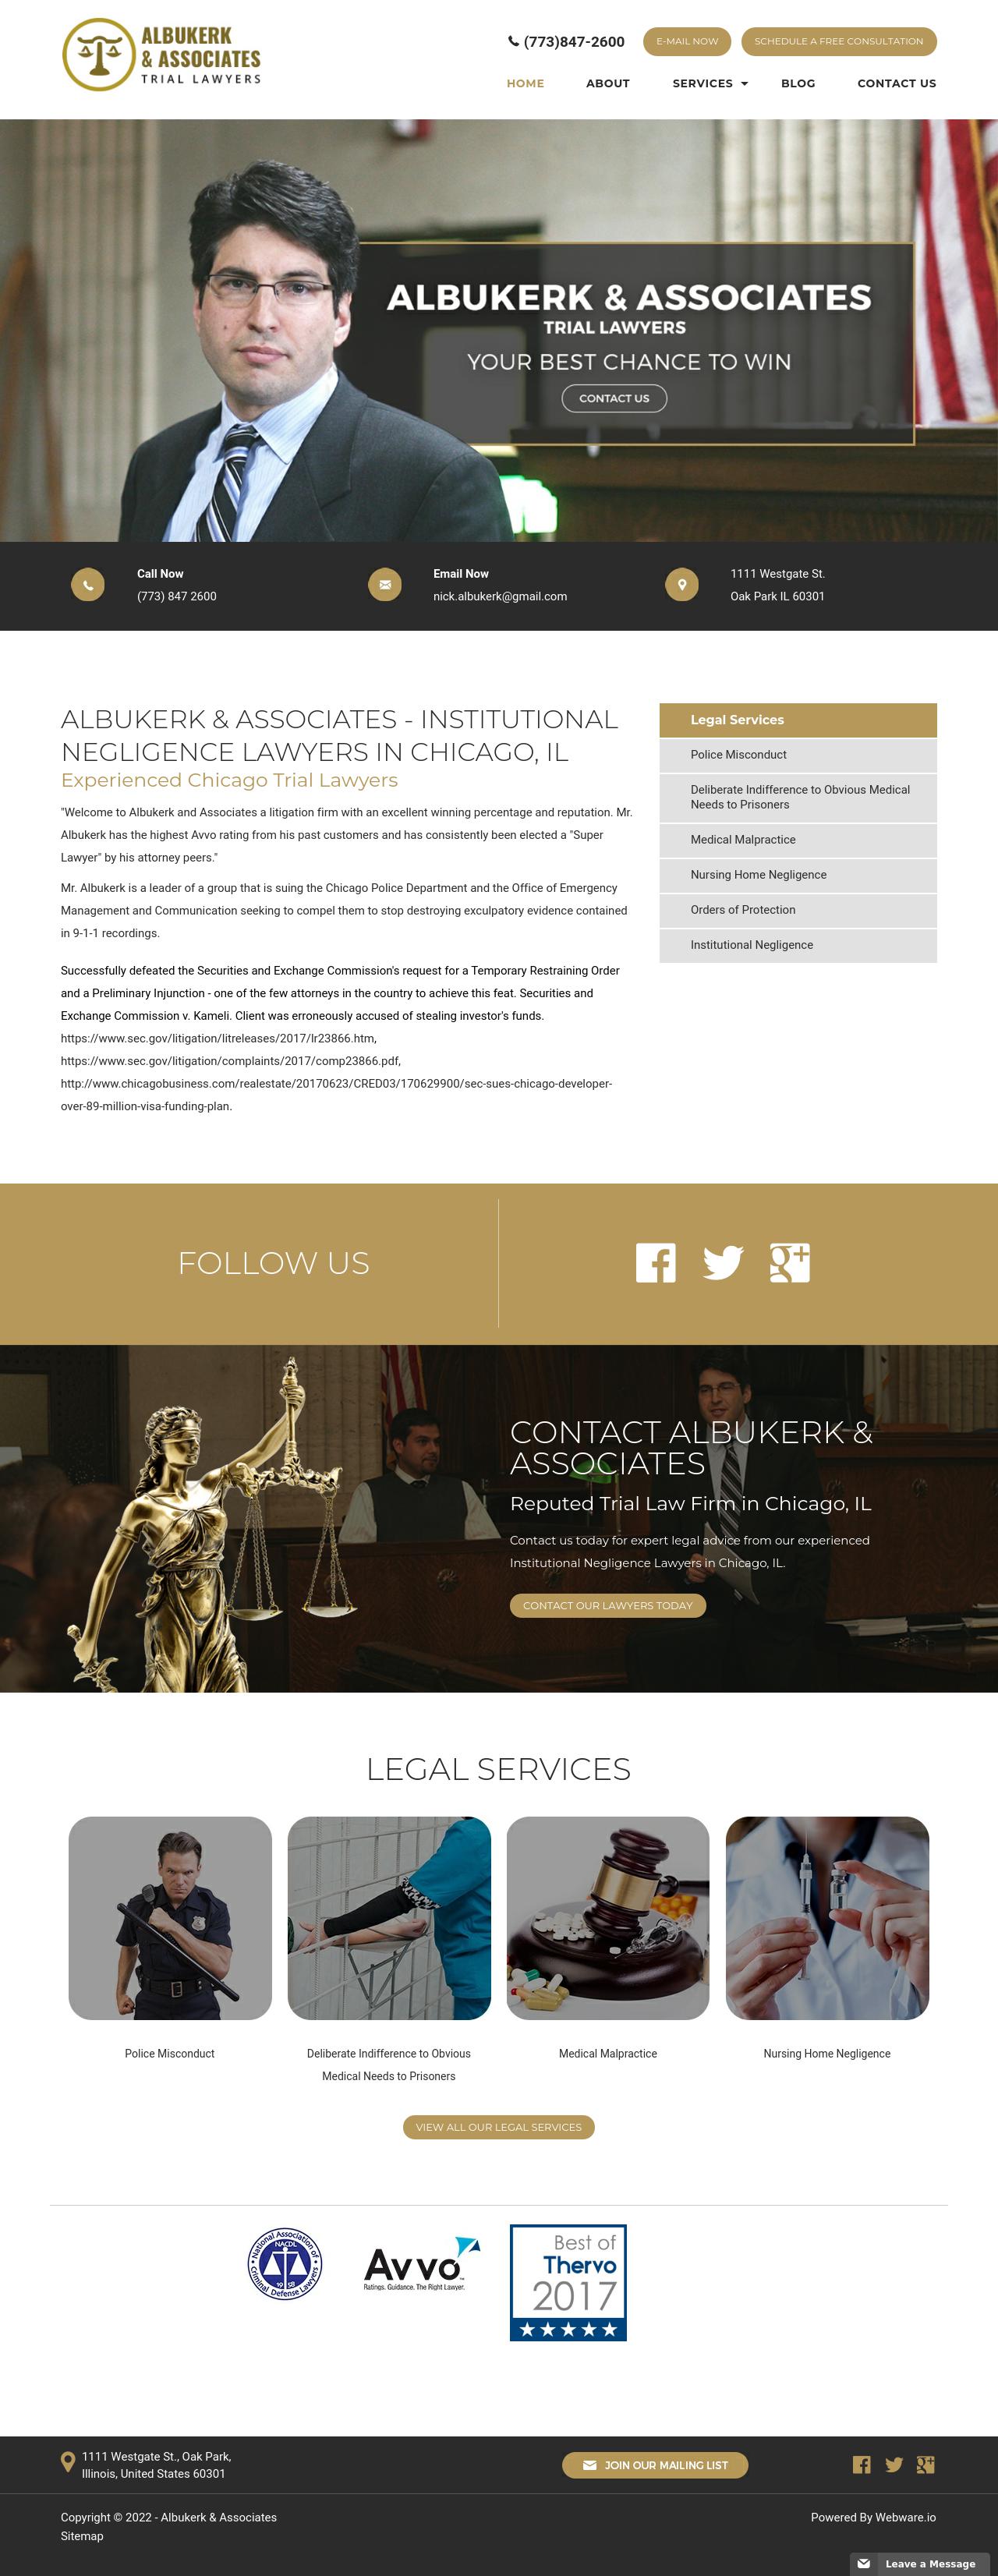 Albukerk & Associates - Chicago IL Lawyers